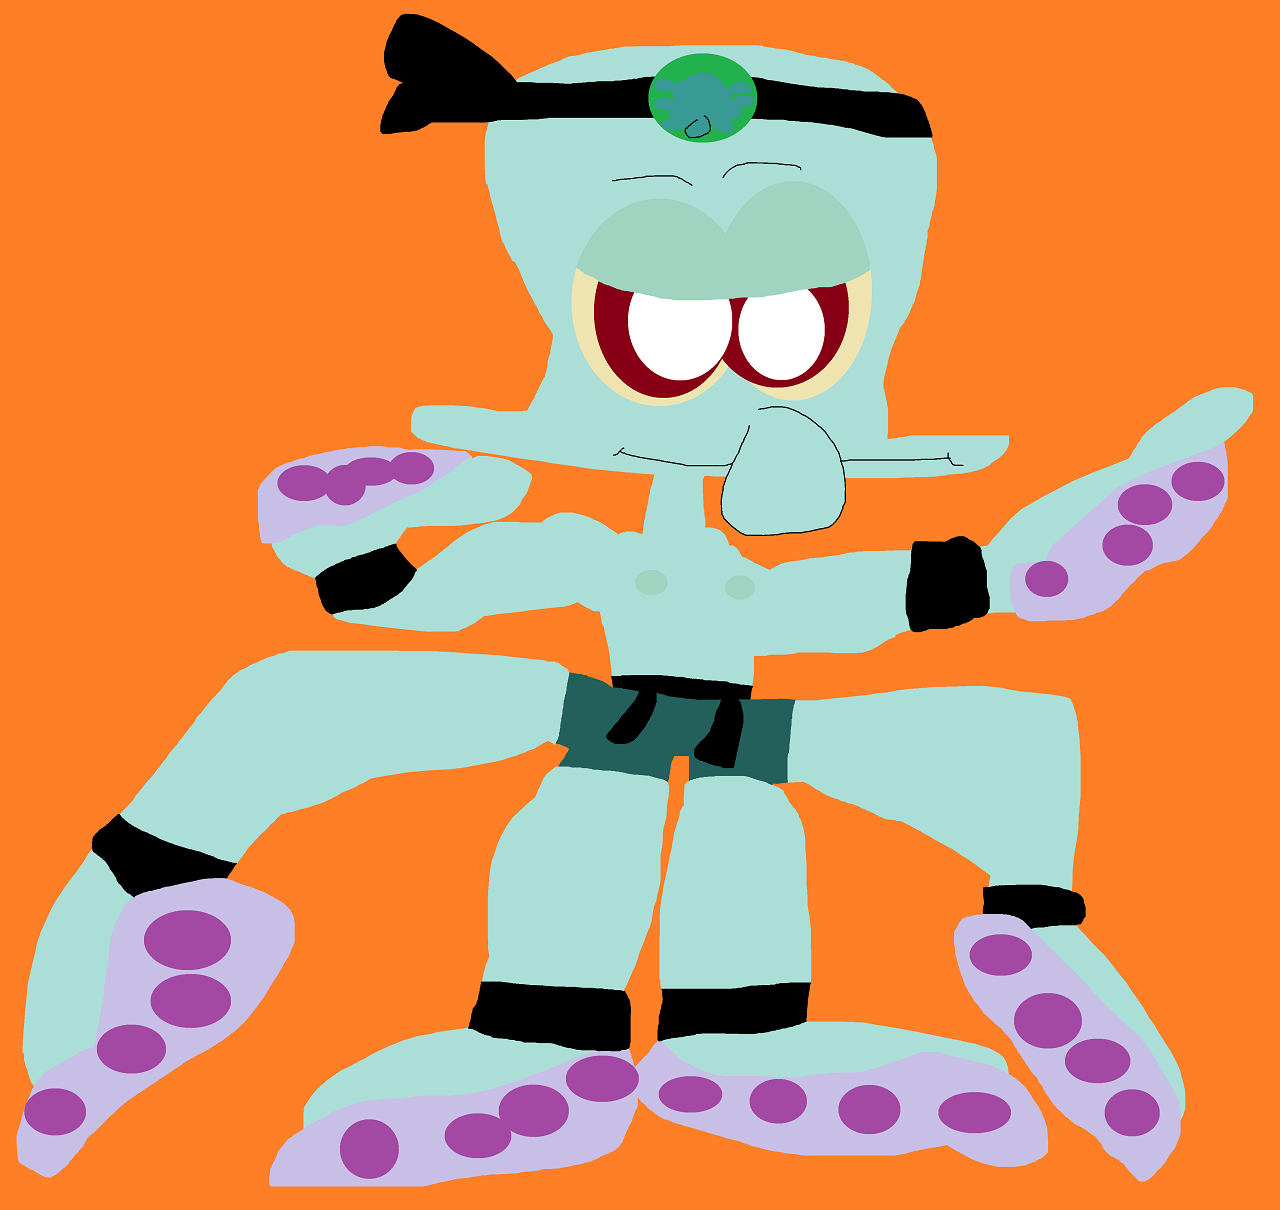 The Buff Karate Octopus by Falconlobo